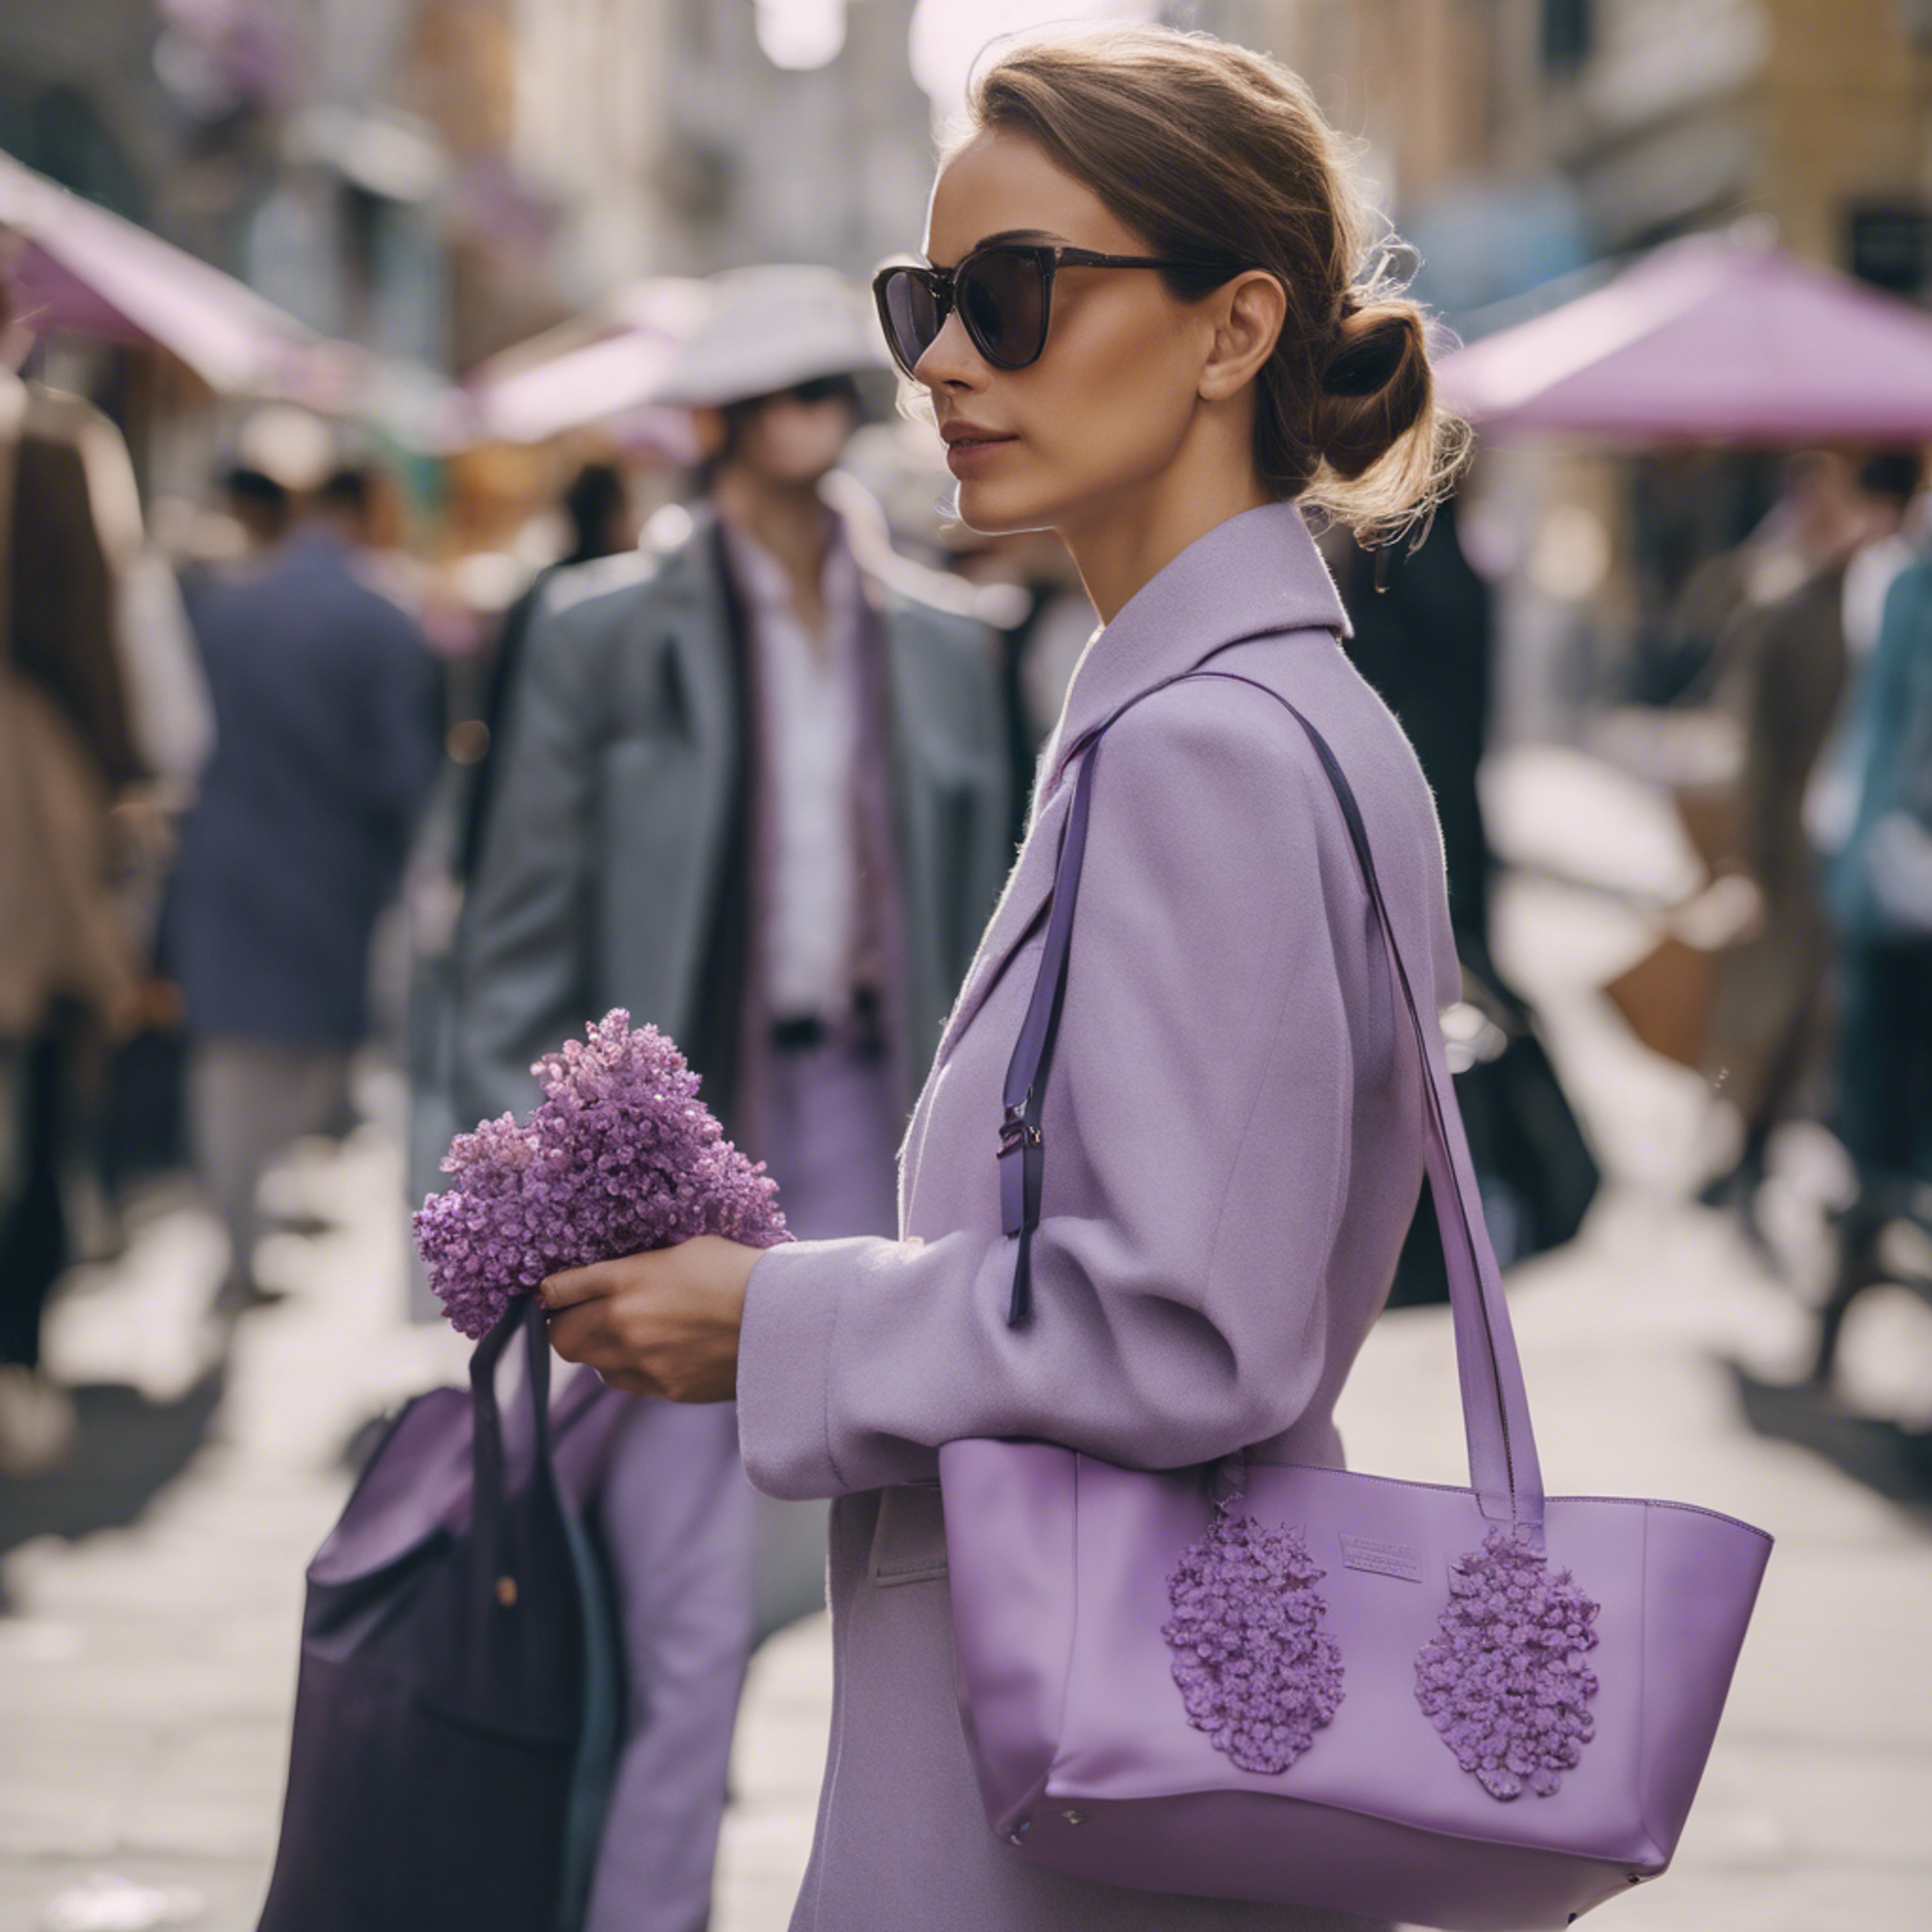 An elegant lady carrying a preppy lilac tote bag while walking along a crowded city street. ورق الجدران[fda66da185c34bc685d3]